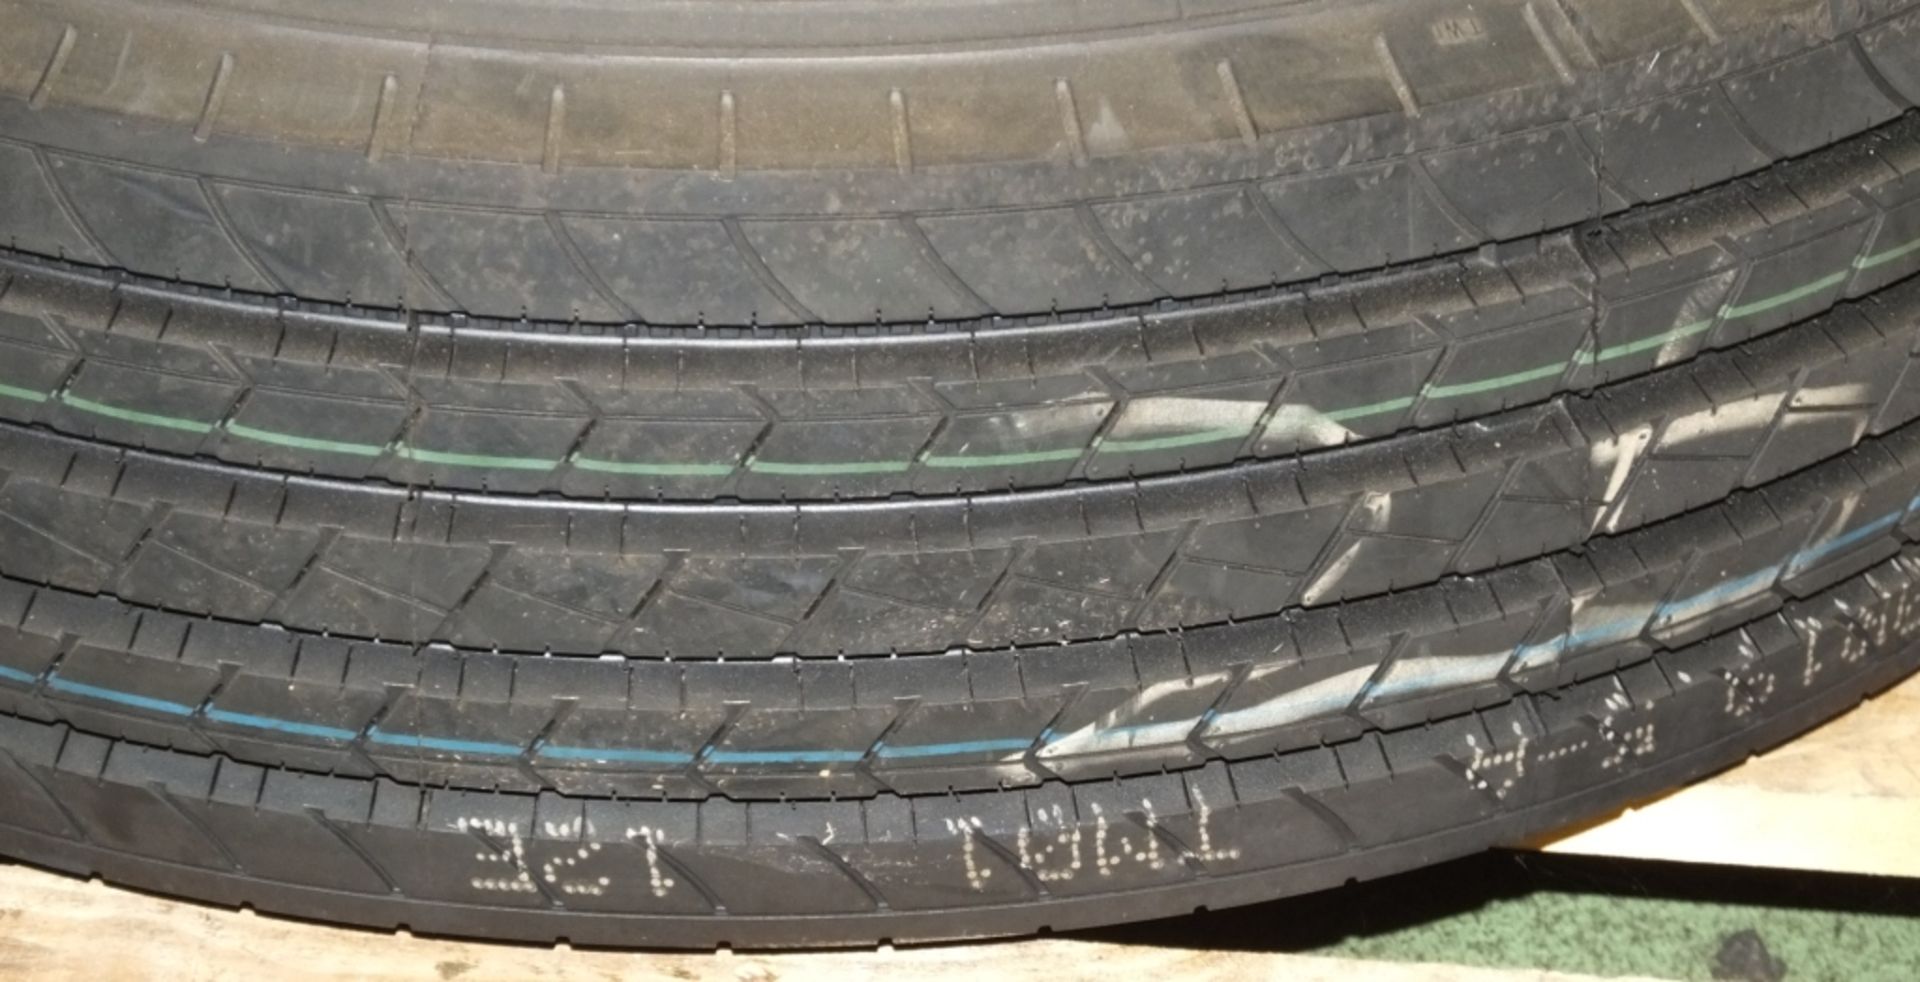 Alplus 265 / 70R 19.5 S201 tyre (new & unused) - Image 5 of 5